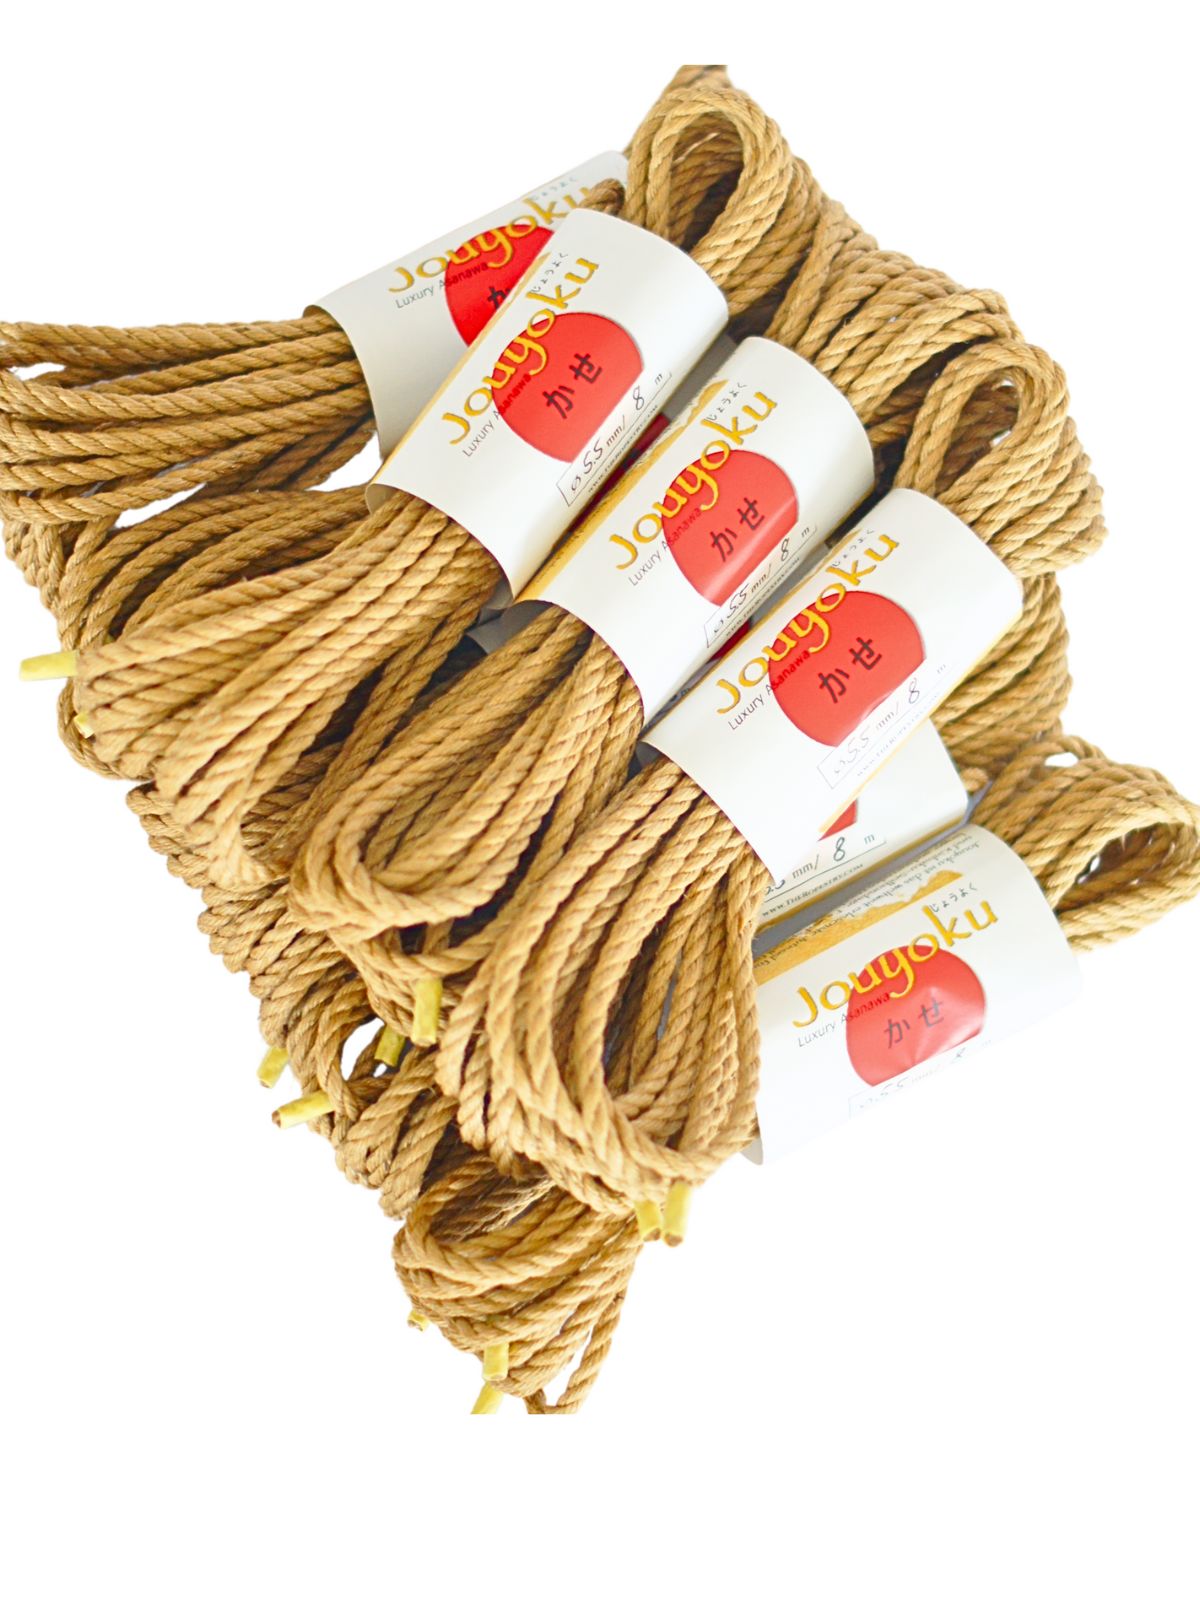 ø 5.5mm JOUYOKU ready-to-use jute rope for Shibari, Kinbaku bondage, various lengths and sets